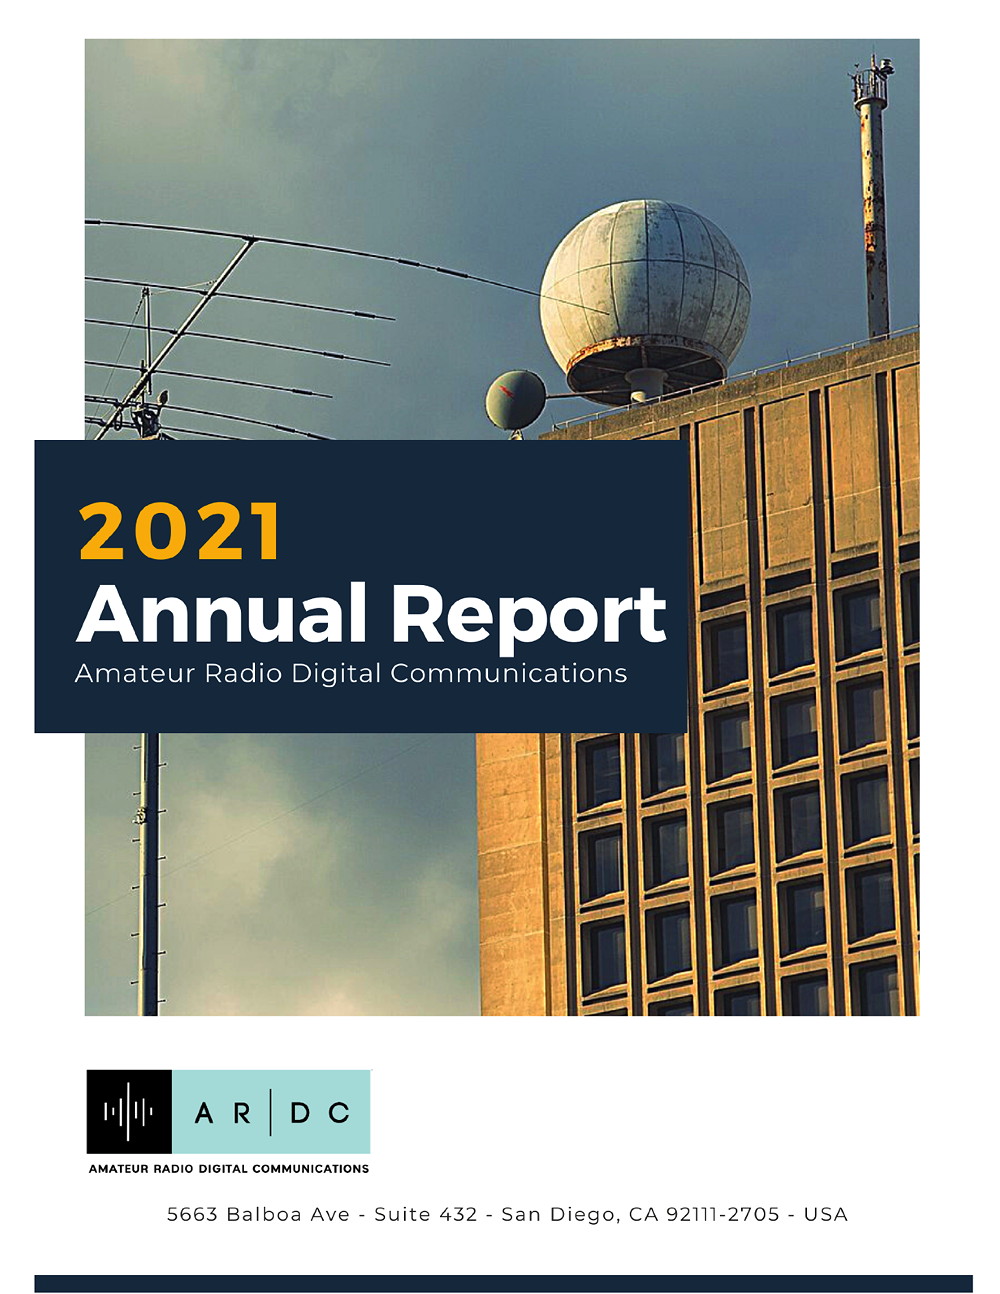 Amateur Radio Digital Communications (ARDC) 2021 Annual Report